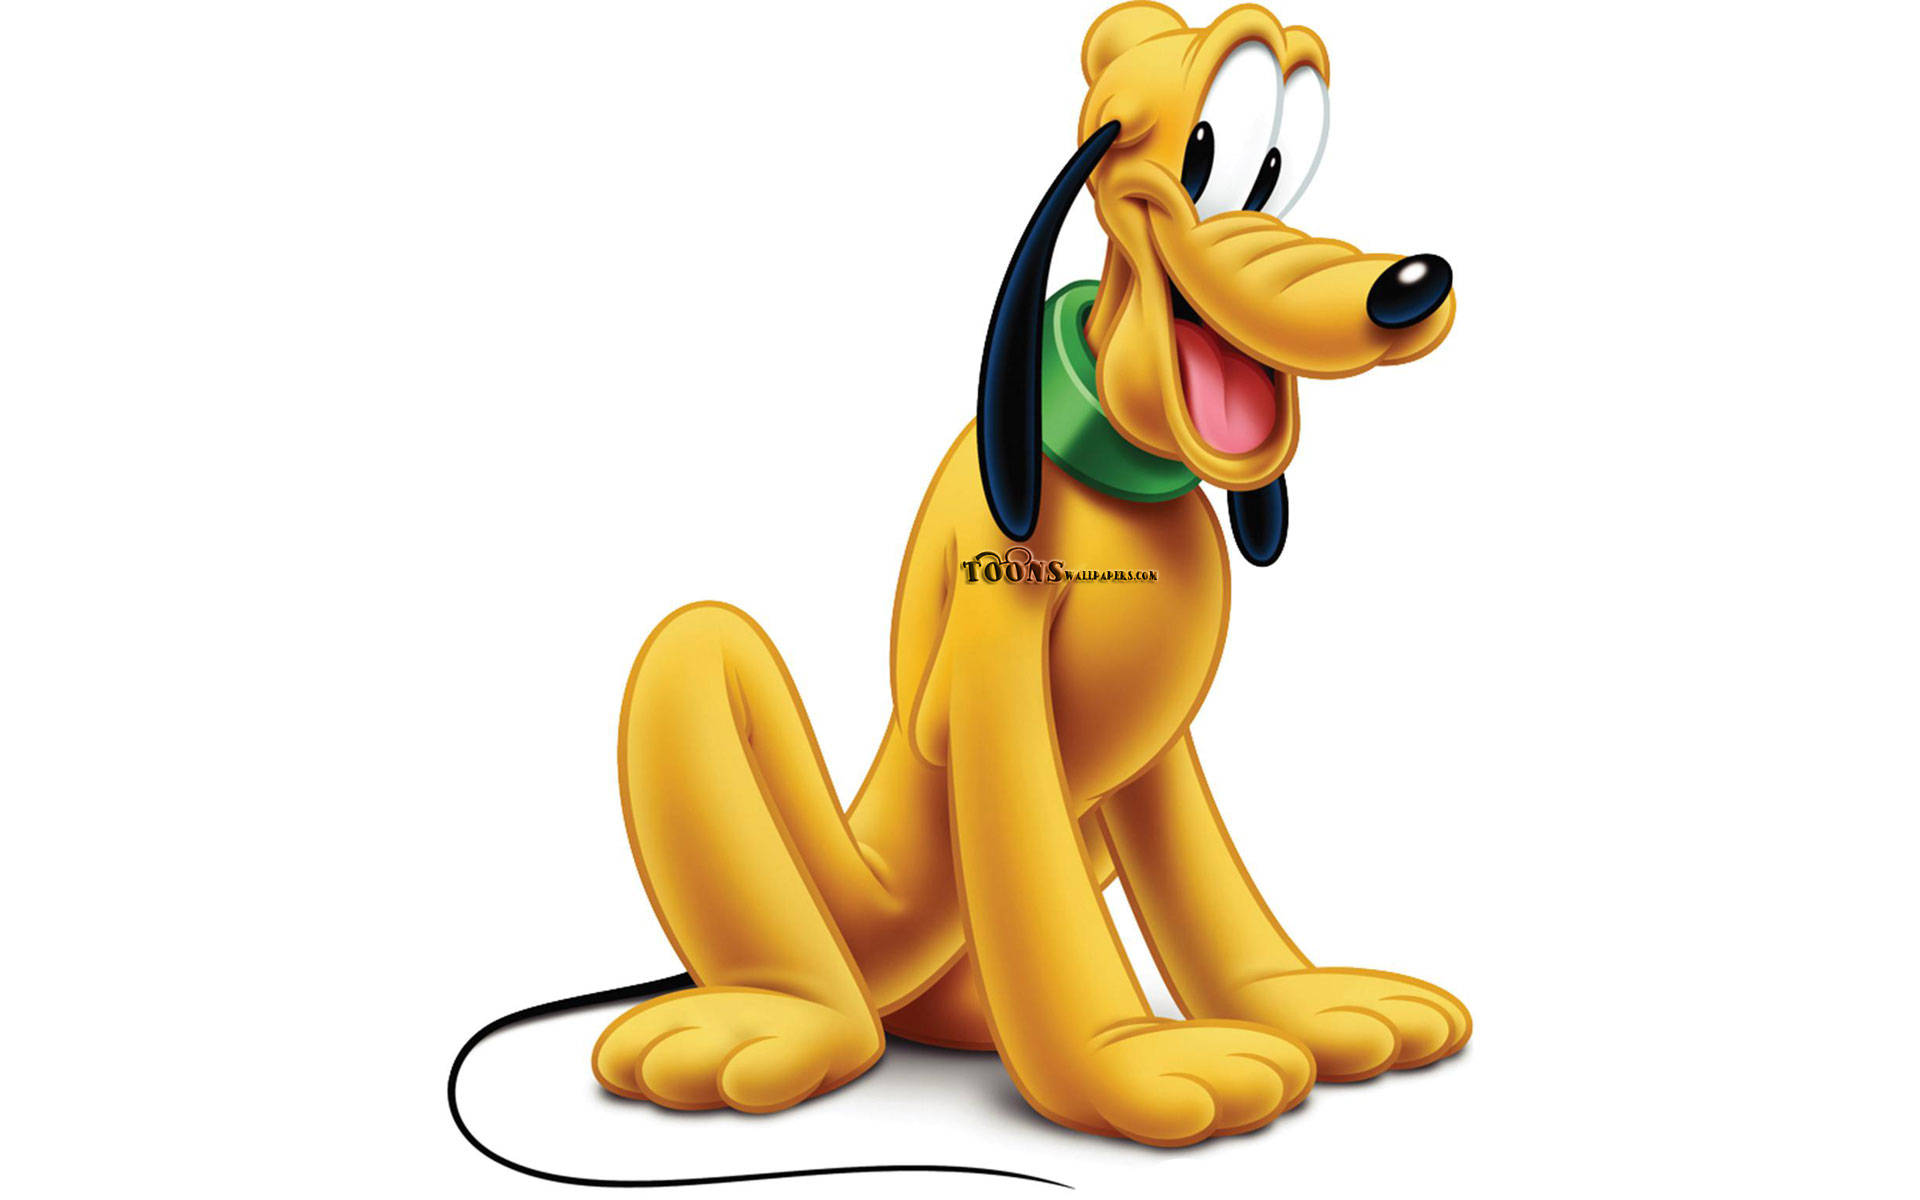 Glade Disney Pluto som hovedperson décor wallpapers. Wallpaper